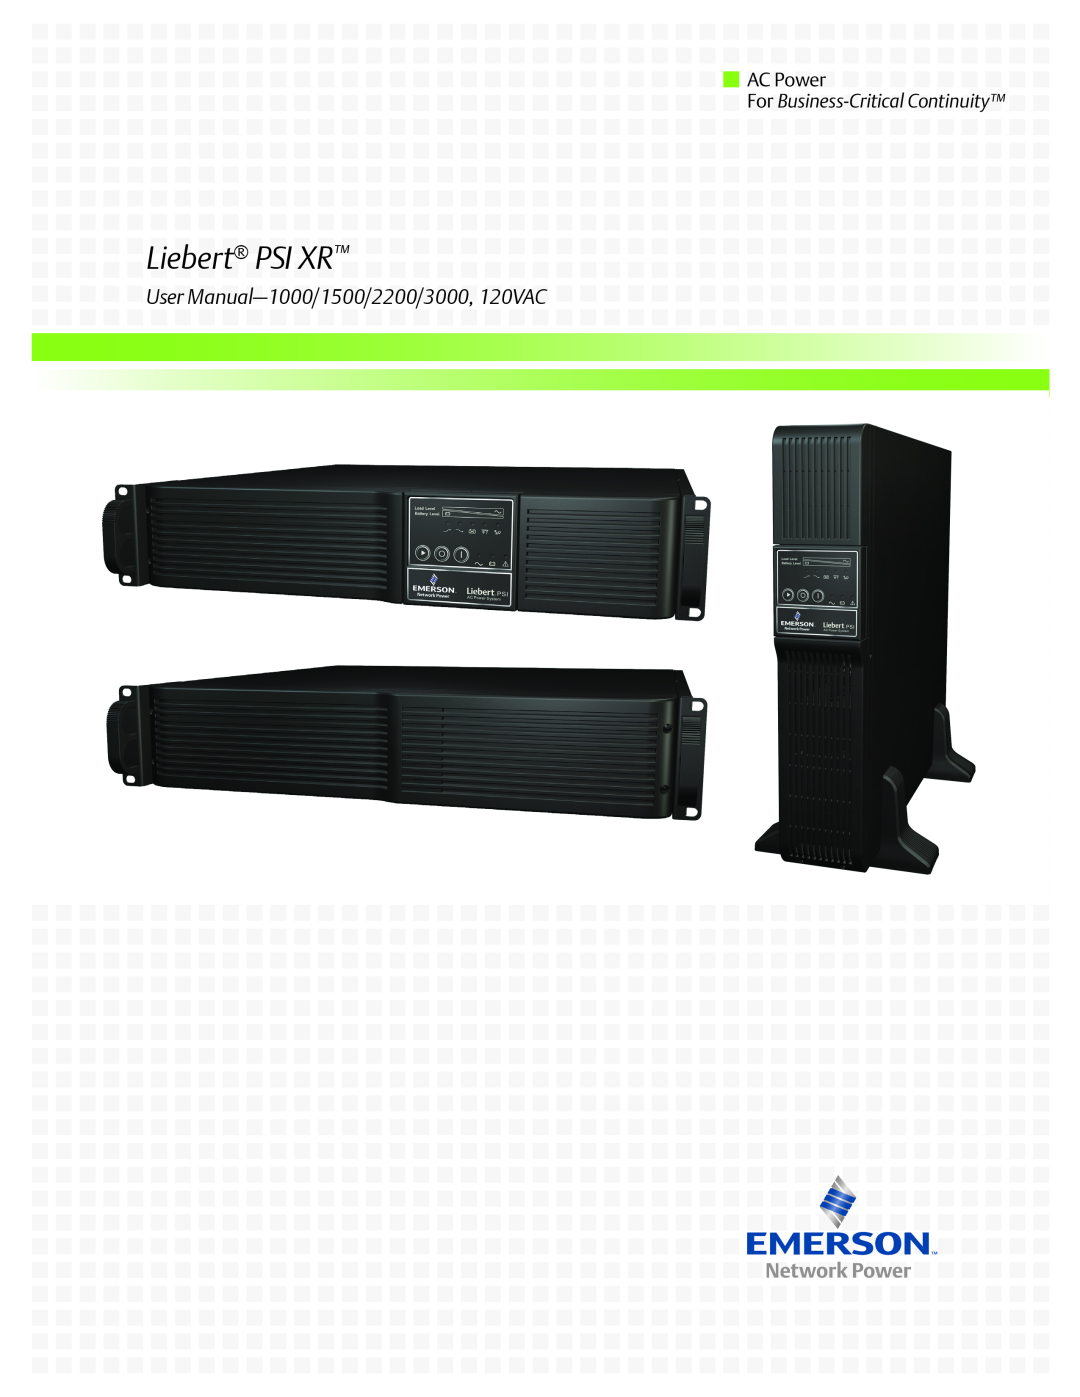 Emerson installation manual Liebert Challenger 3000 with iCOM, Installation Manual- 3 &5 Tons,50& 60Hz 